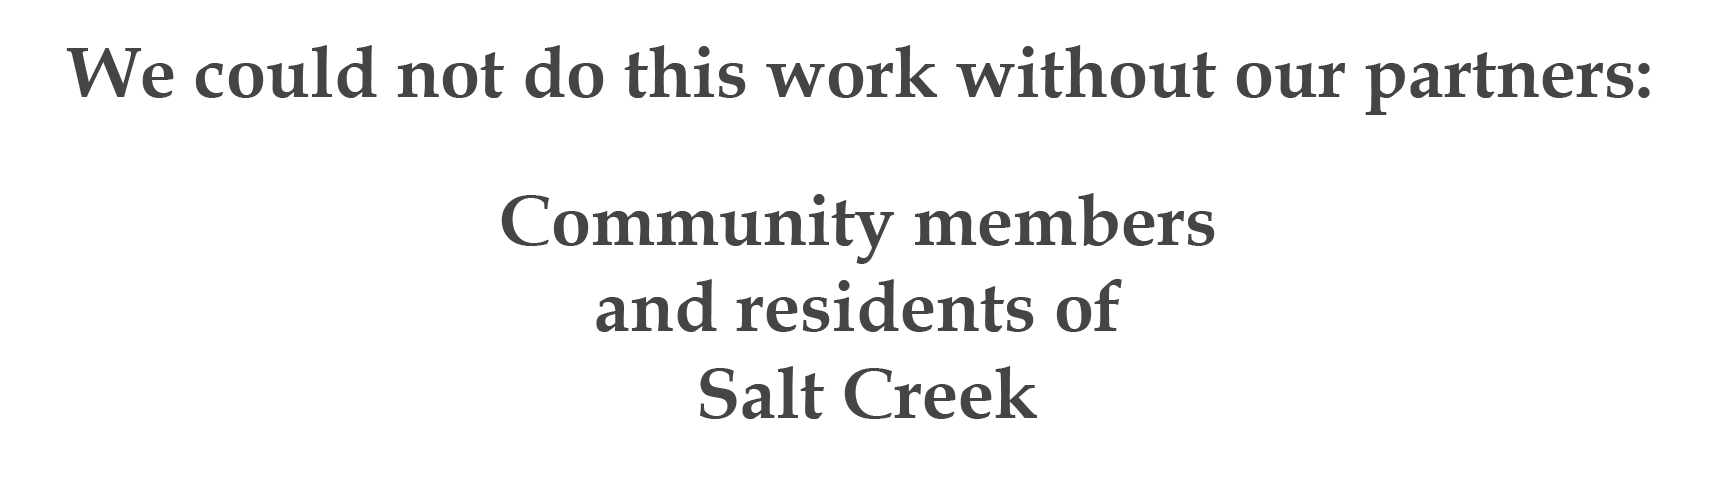 Salt Creek Partners